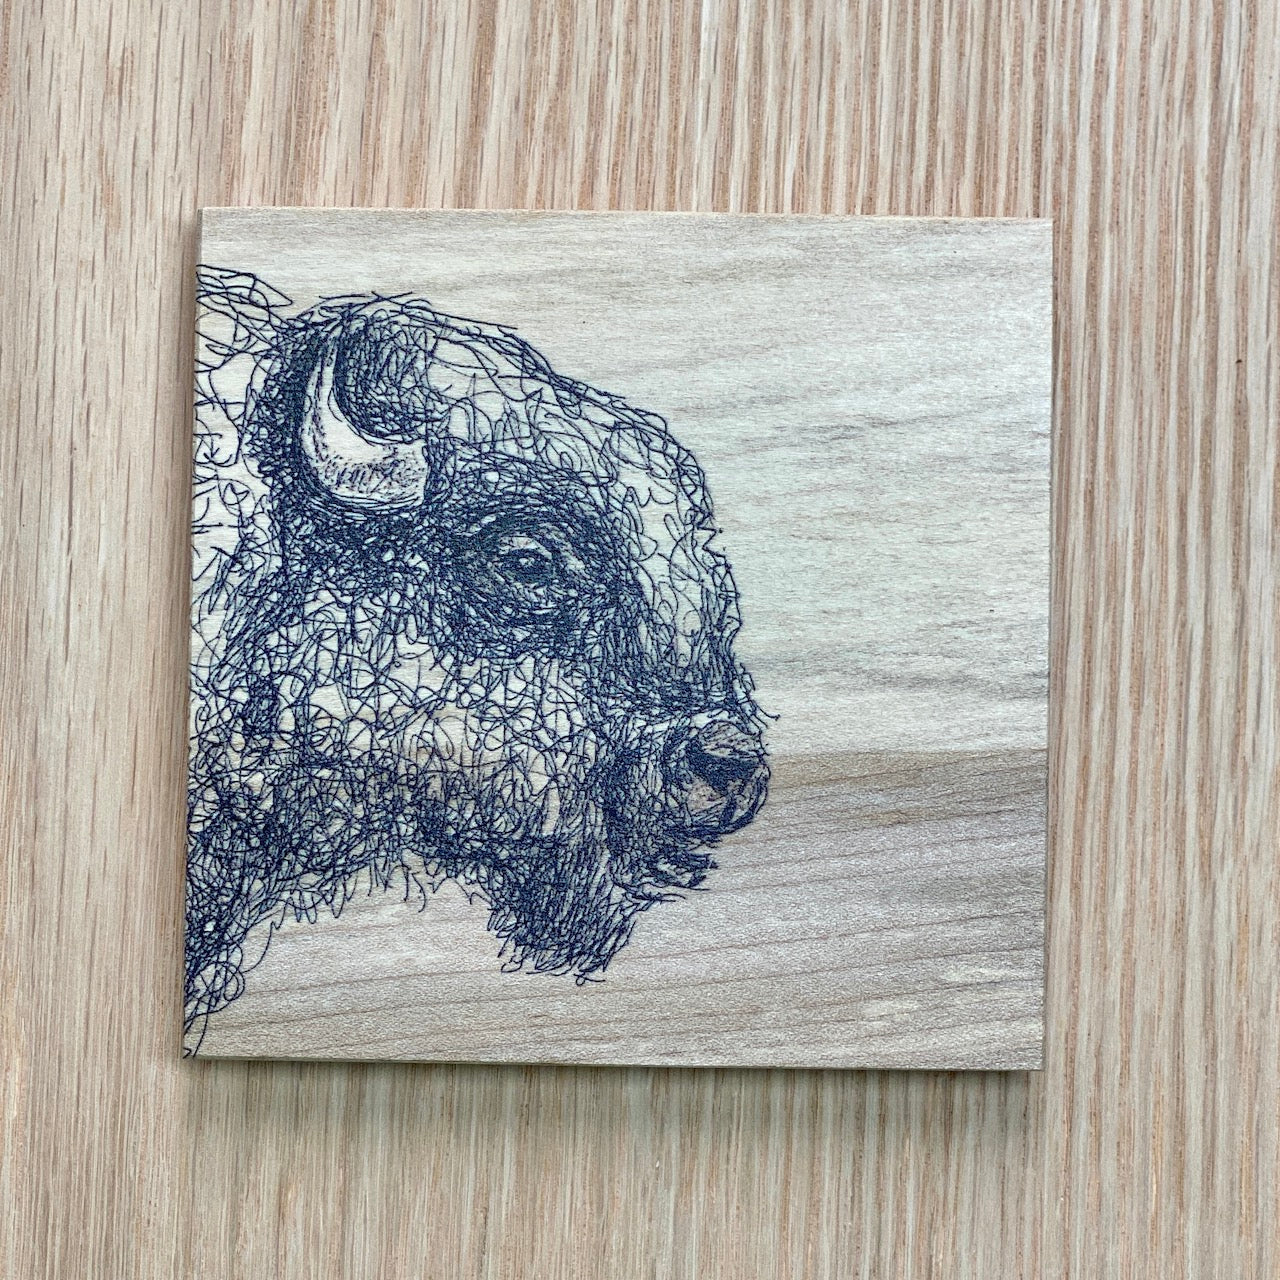 Wood Coaster - Majestic Bison by Michaela Ivancova Art